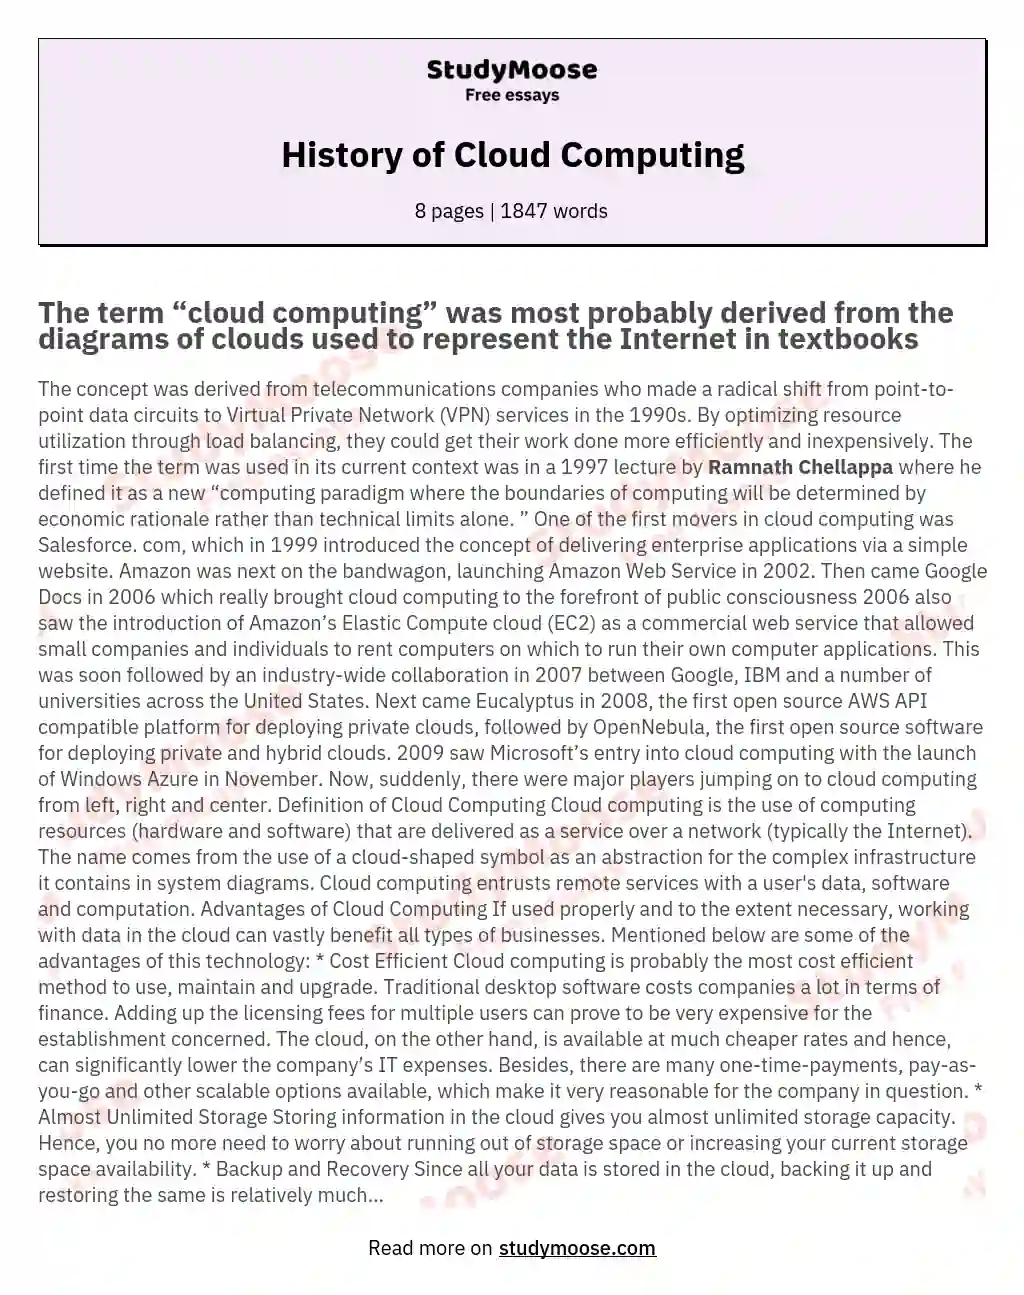 History of Cloud Computing essay